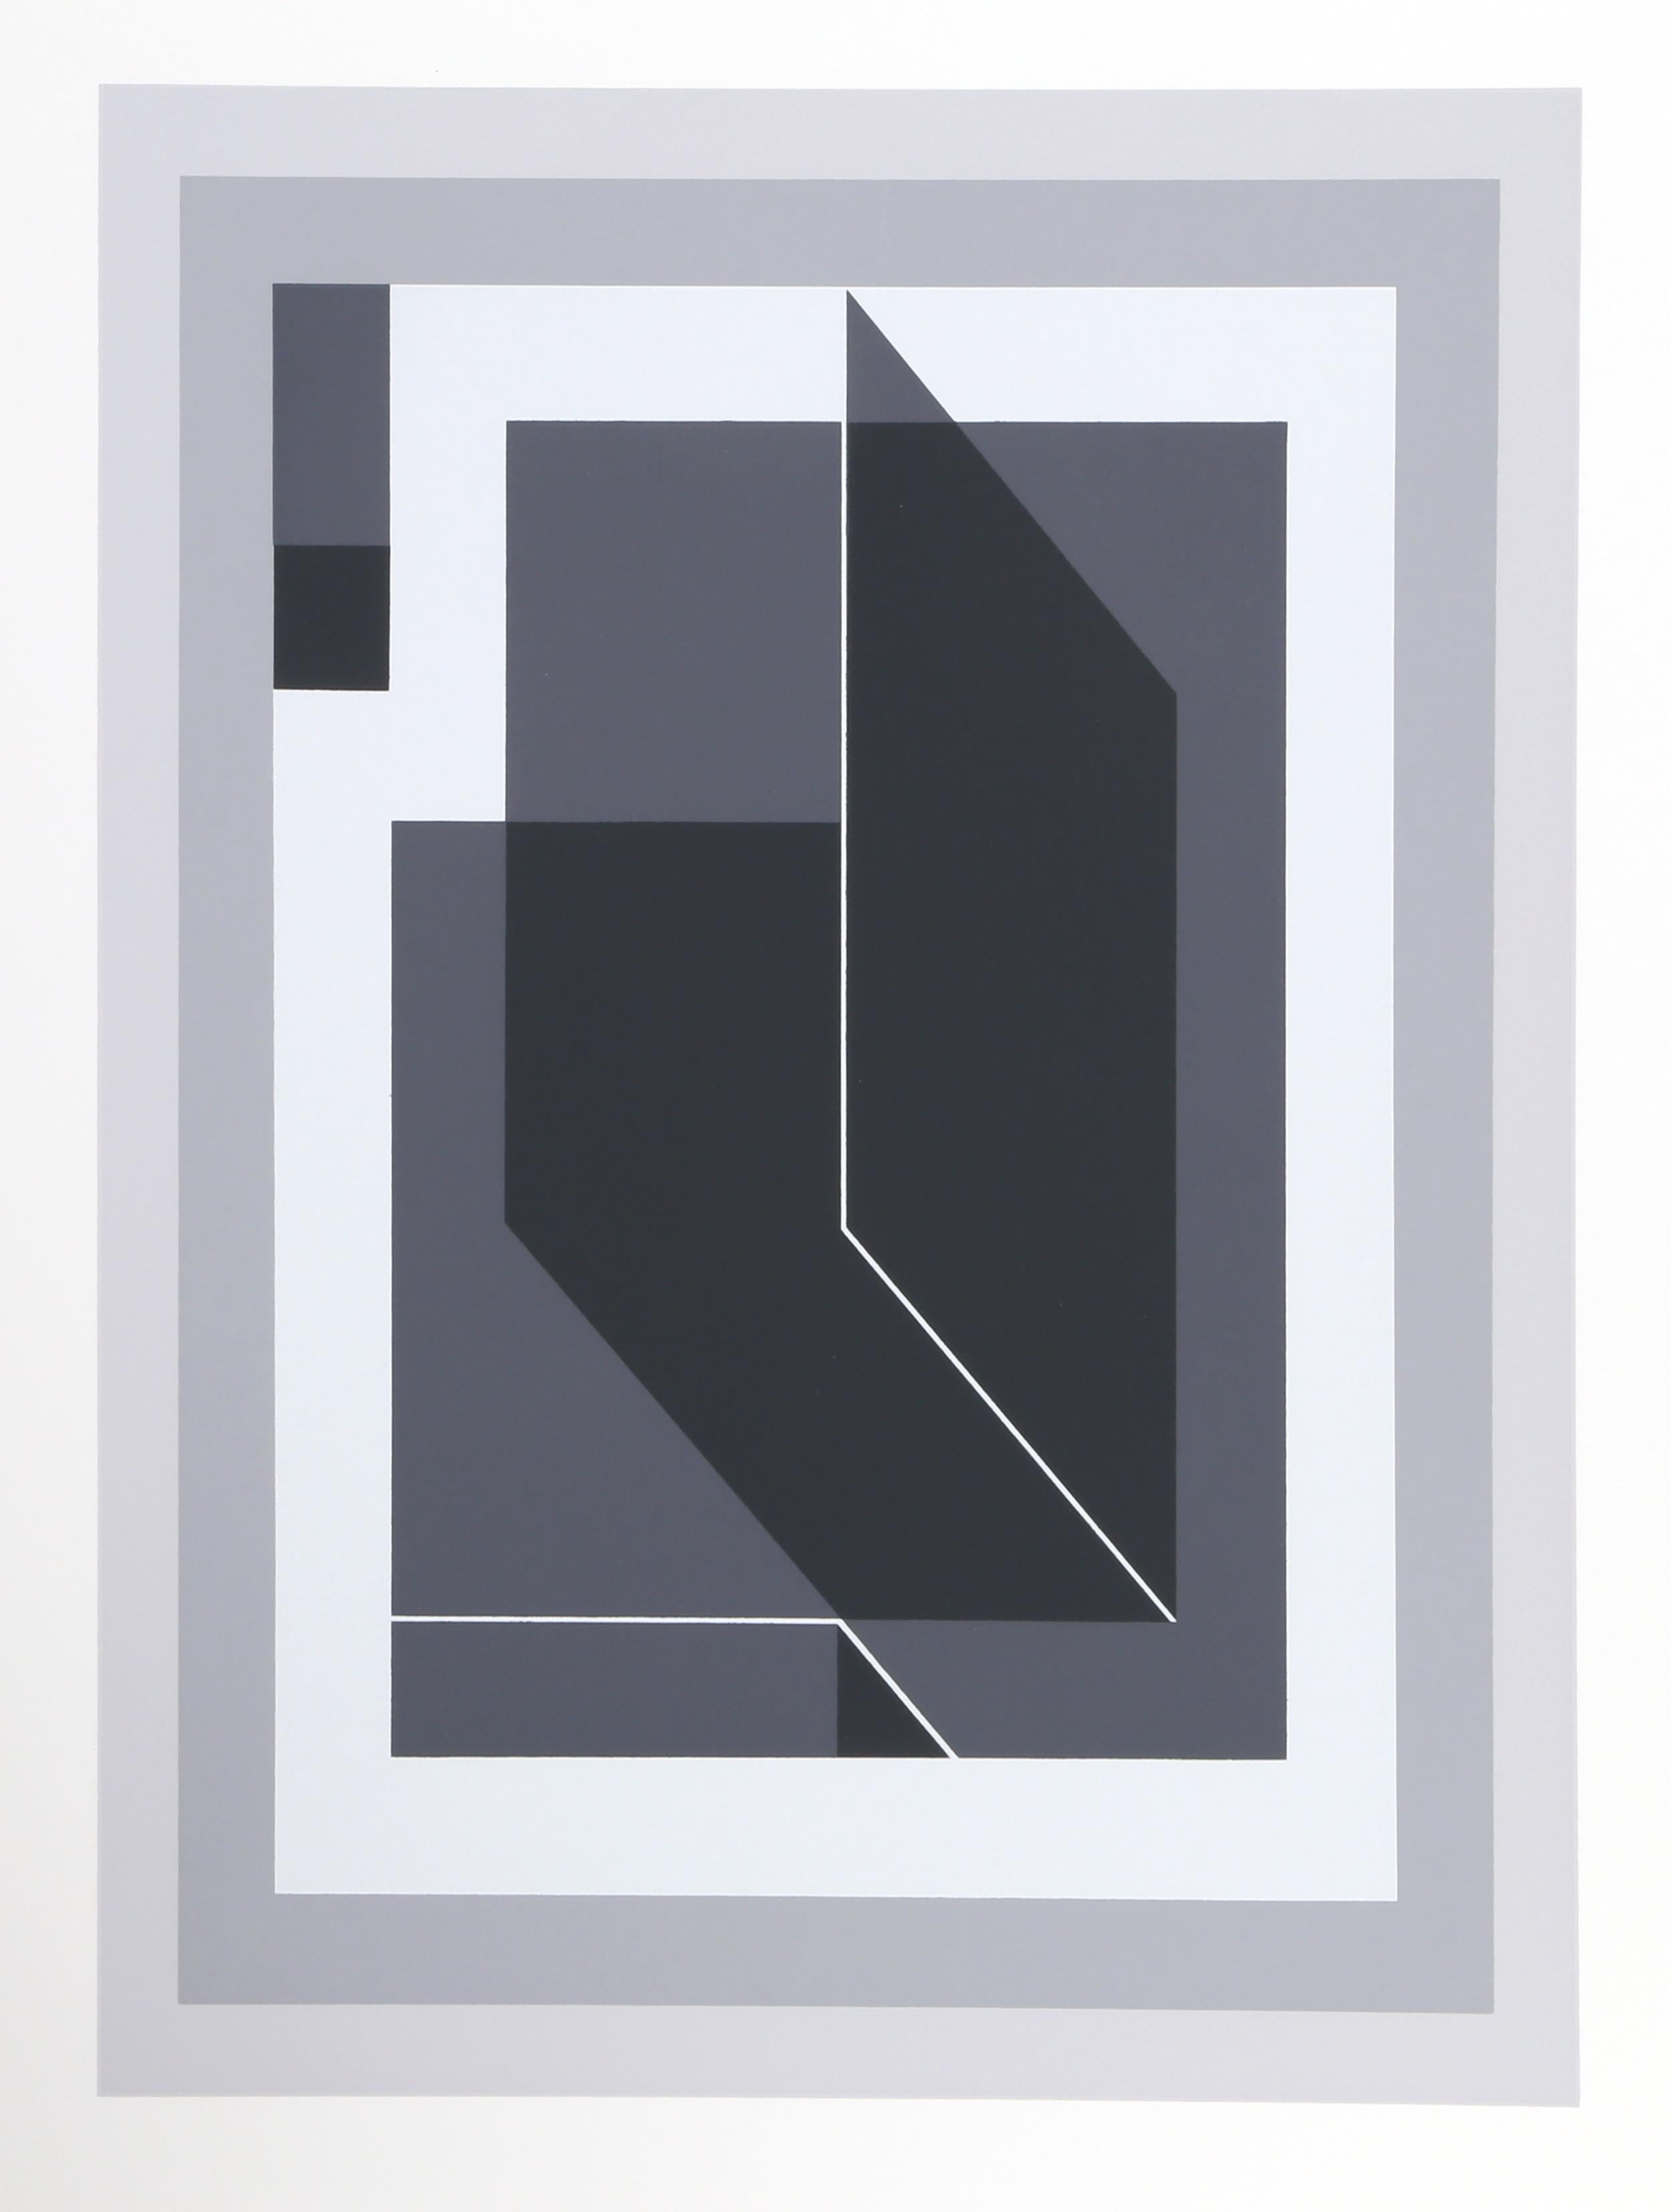 Untitled from Formulation: Articulation, Framed Silkscreen by Josef Albers 1